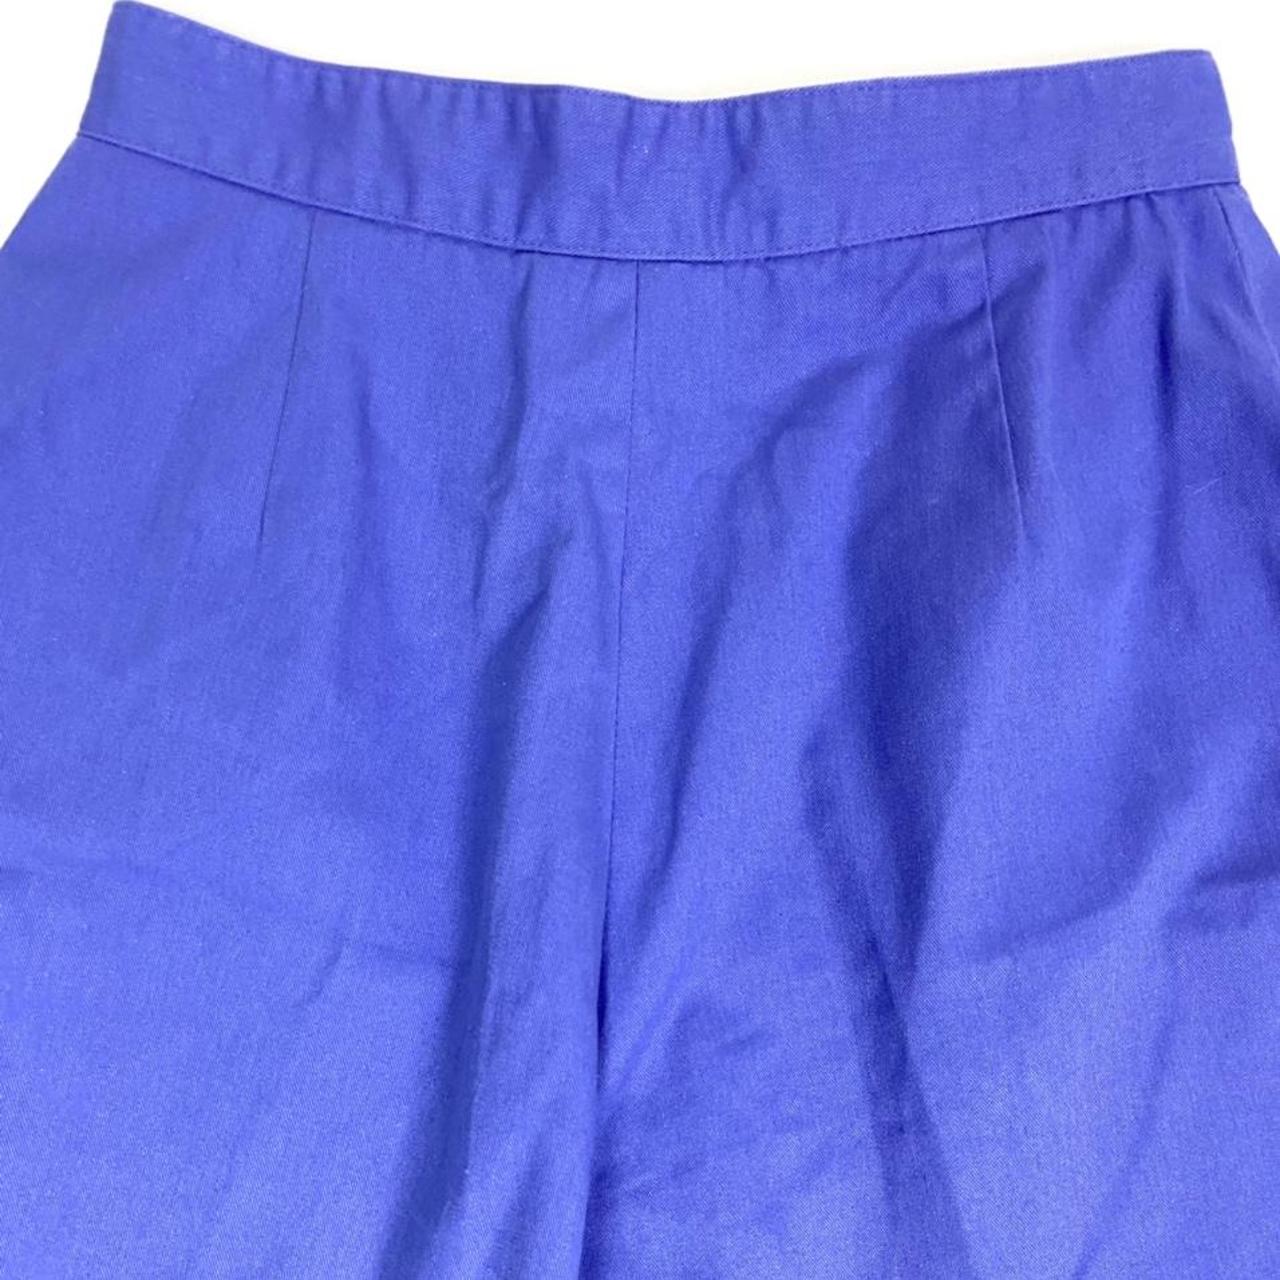 Haggar Women's Purple Shorts (4)